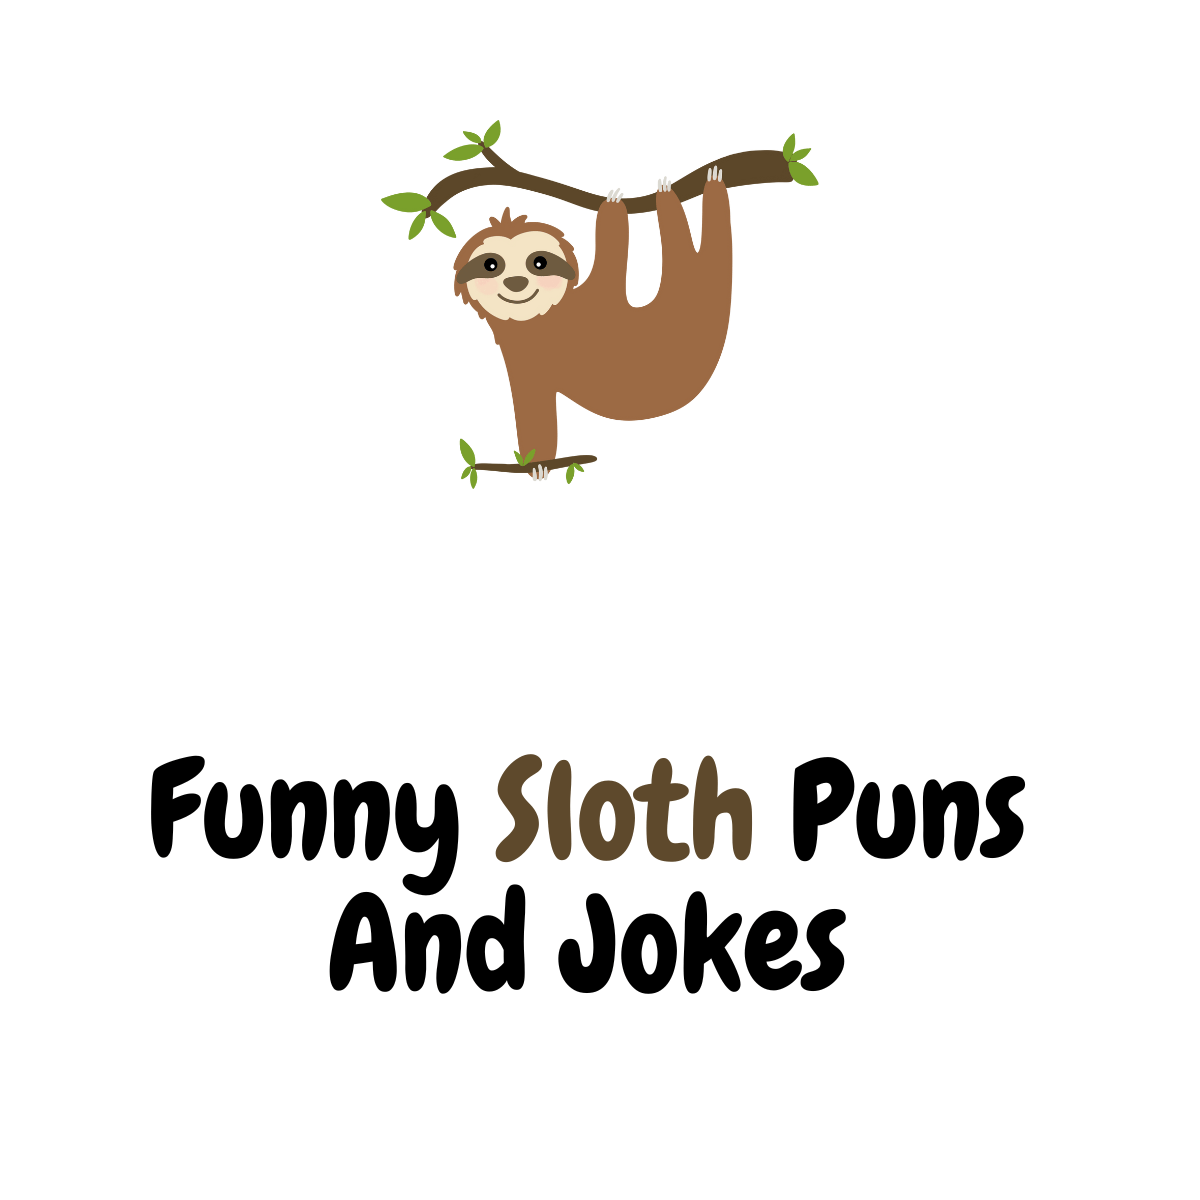 Funny Sloth Puns And Jokes